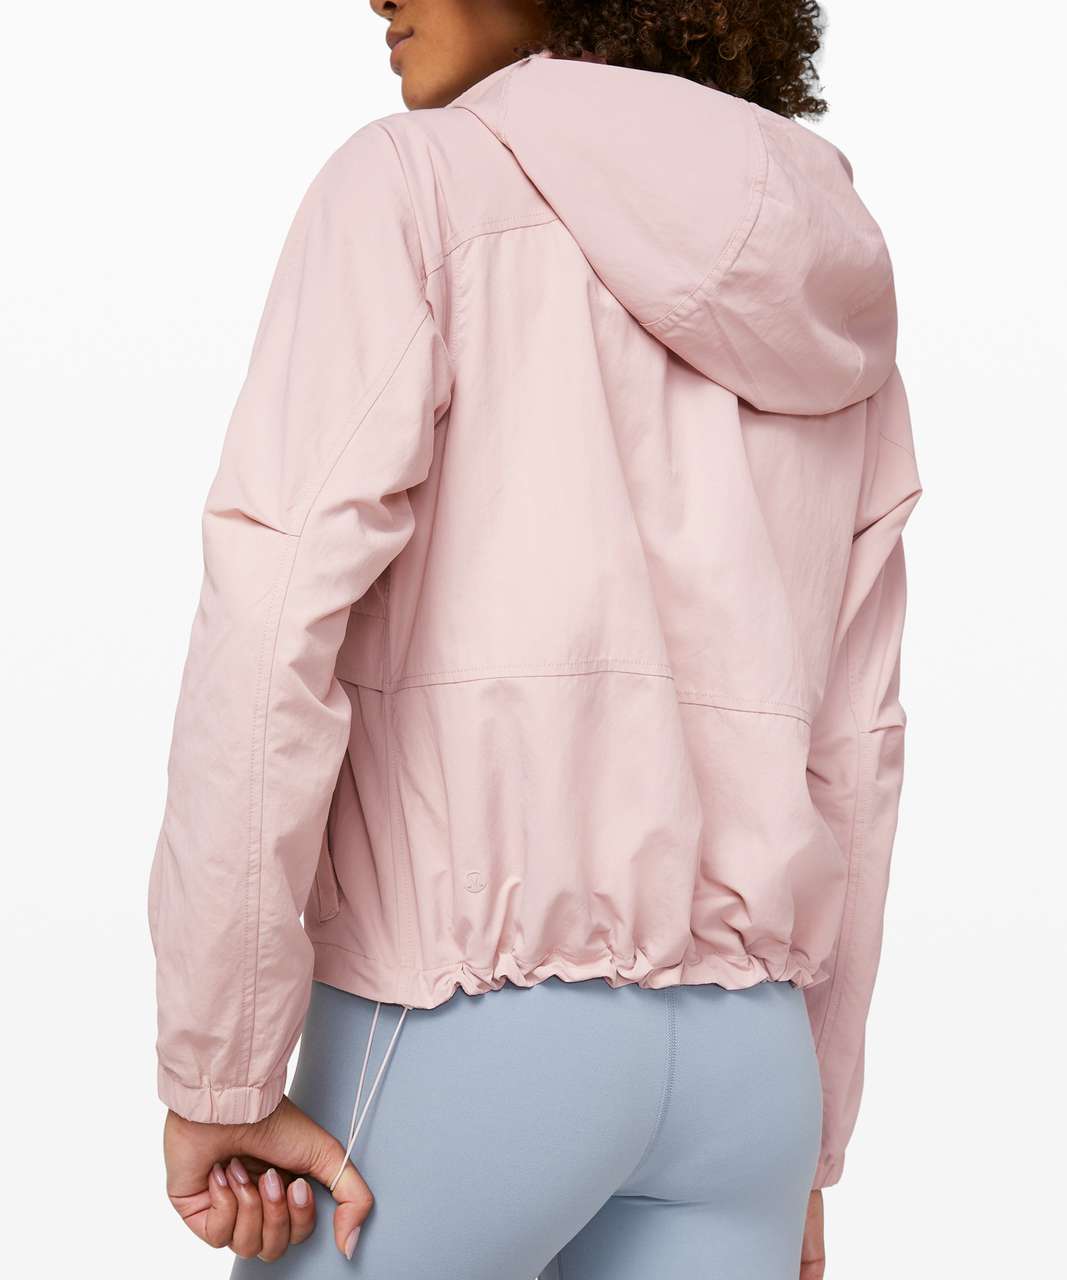 lululemon always effortless jacket in pink bliss - - Depop